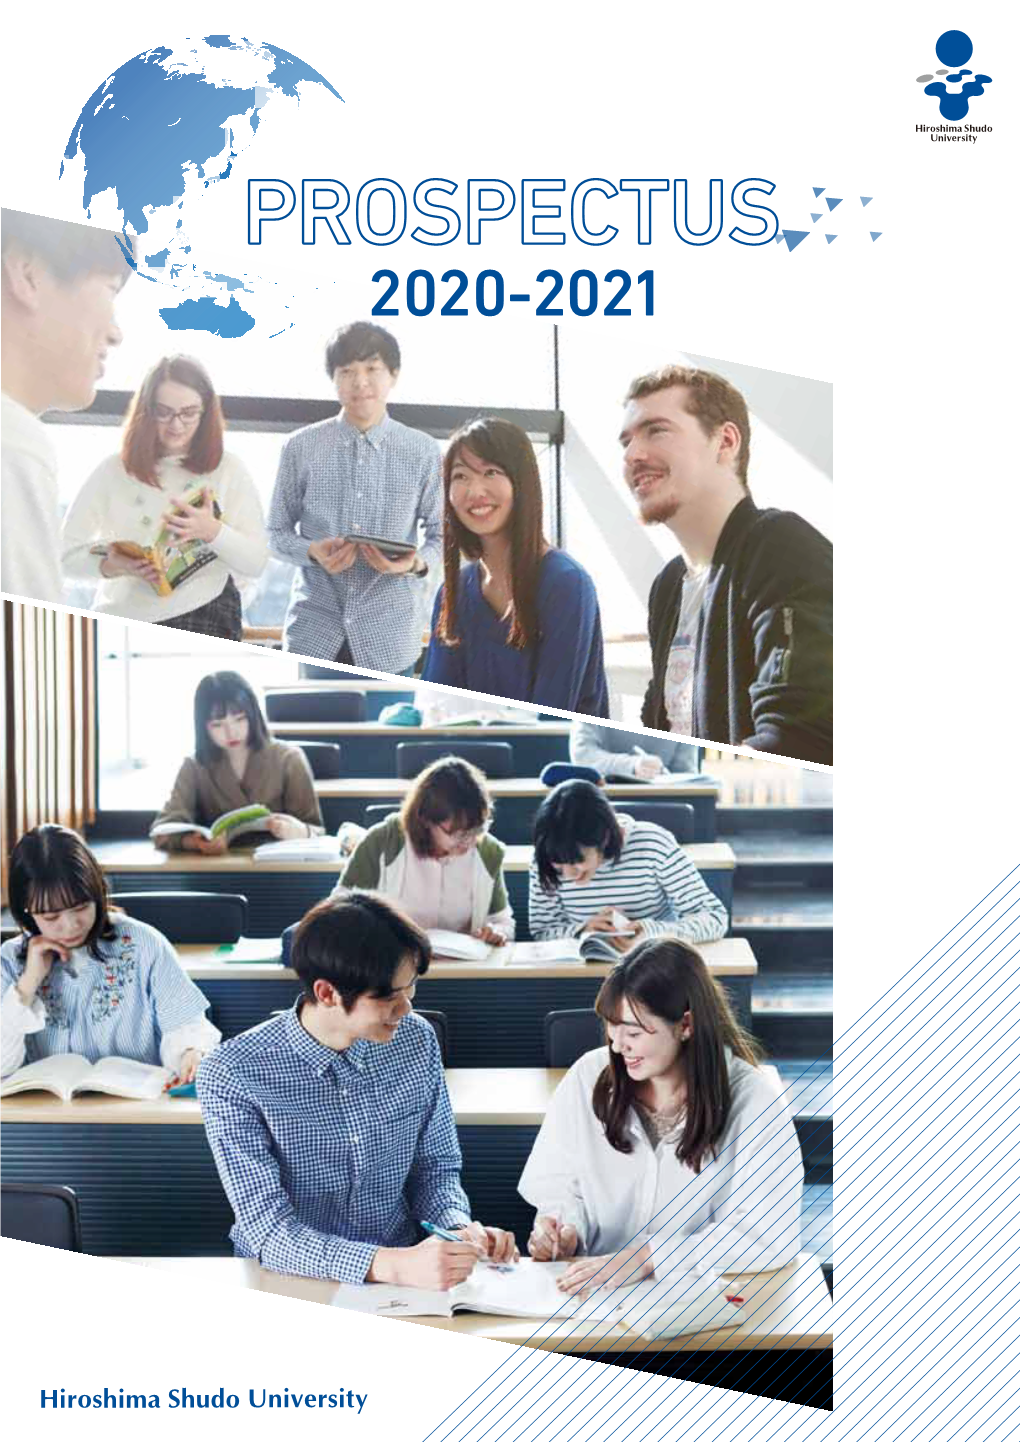 HSU Prospectus 2020-2021 (English)（4.31MB）